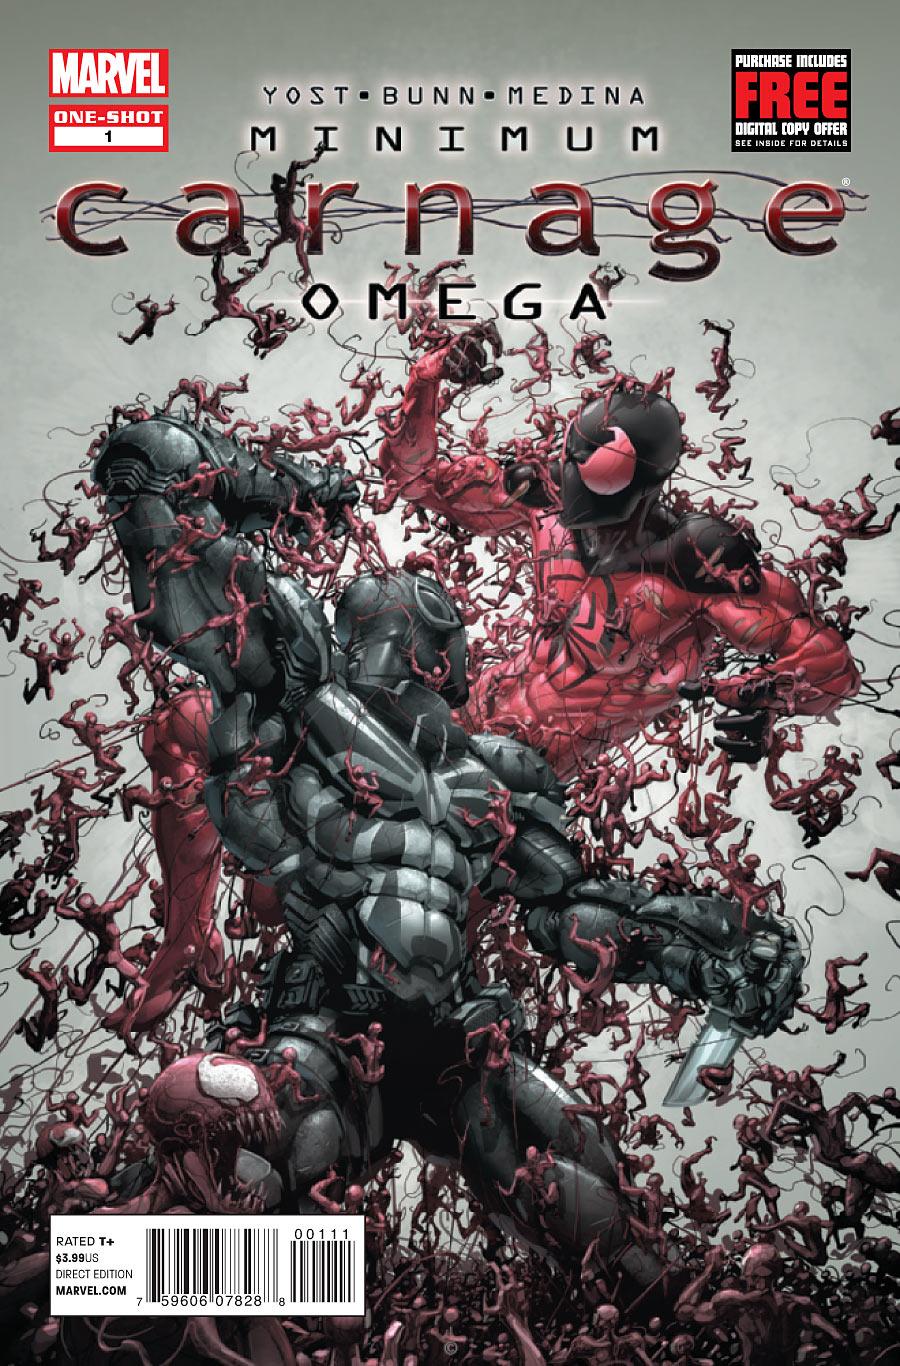 Minimum Carnage: Omega Vol. 1 #1